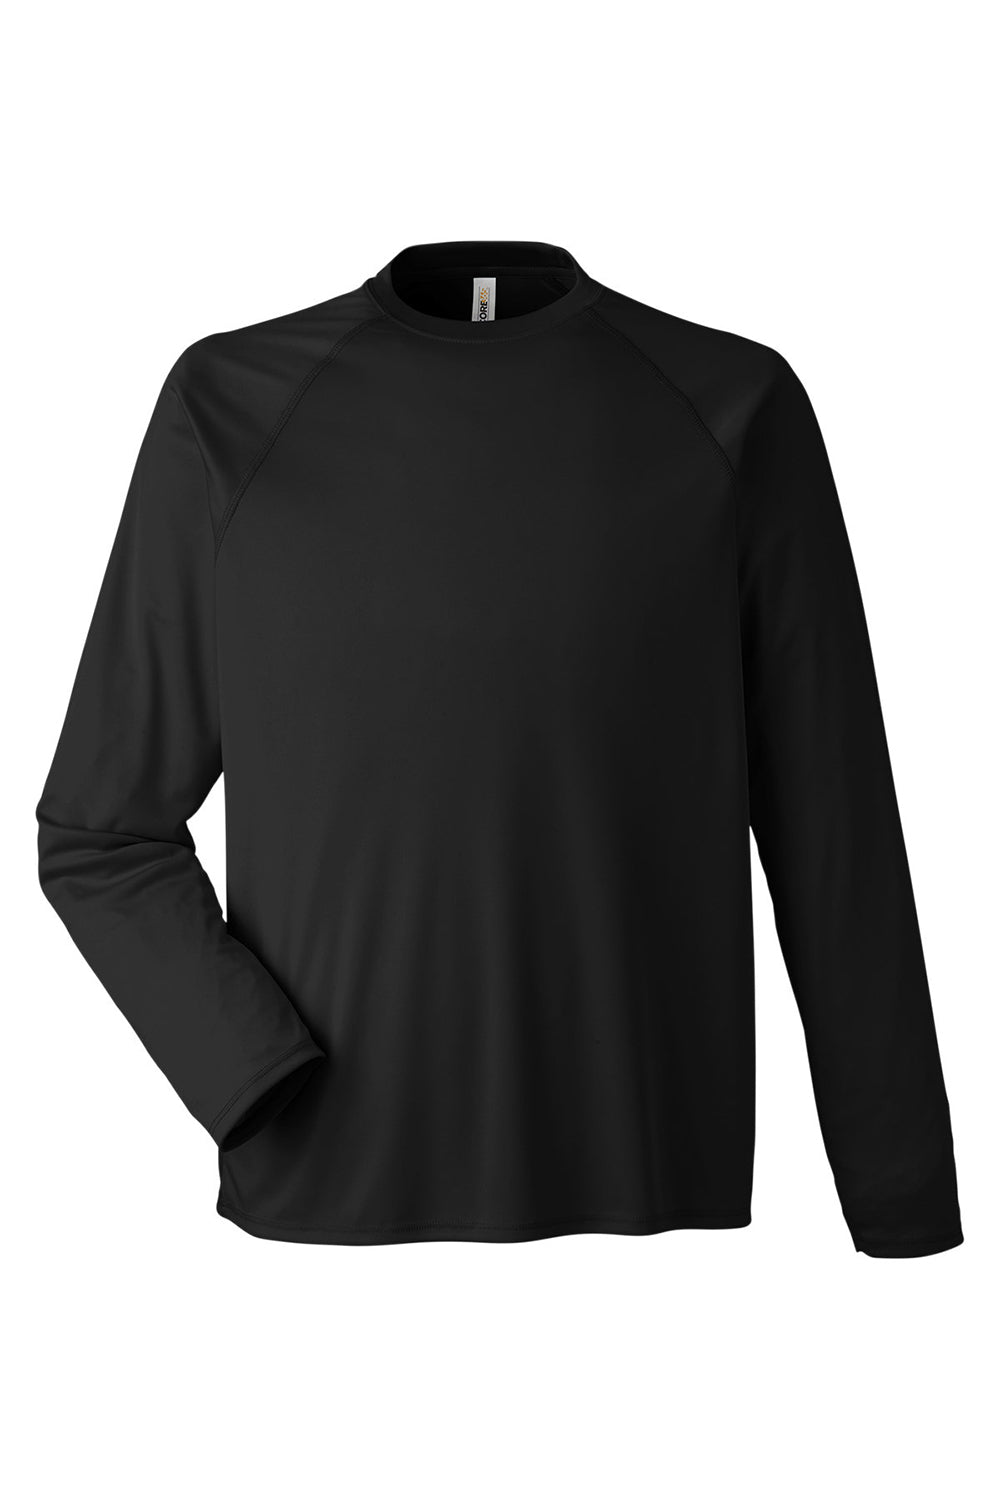 Core 365 CE110 Mens Ultra MVP Raglan Long Sleeve T-Shirt Black Flat Front